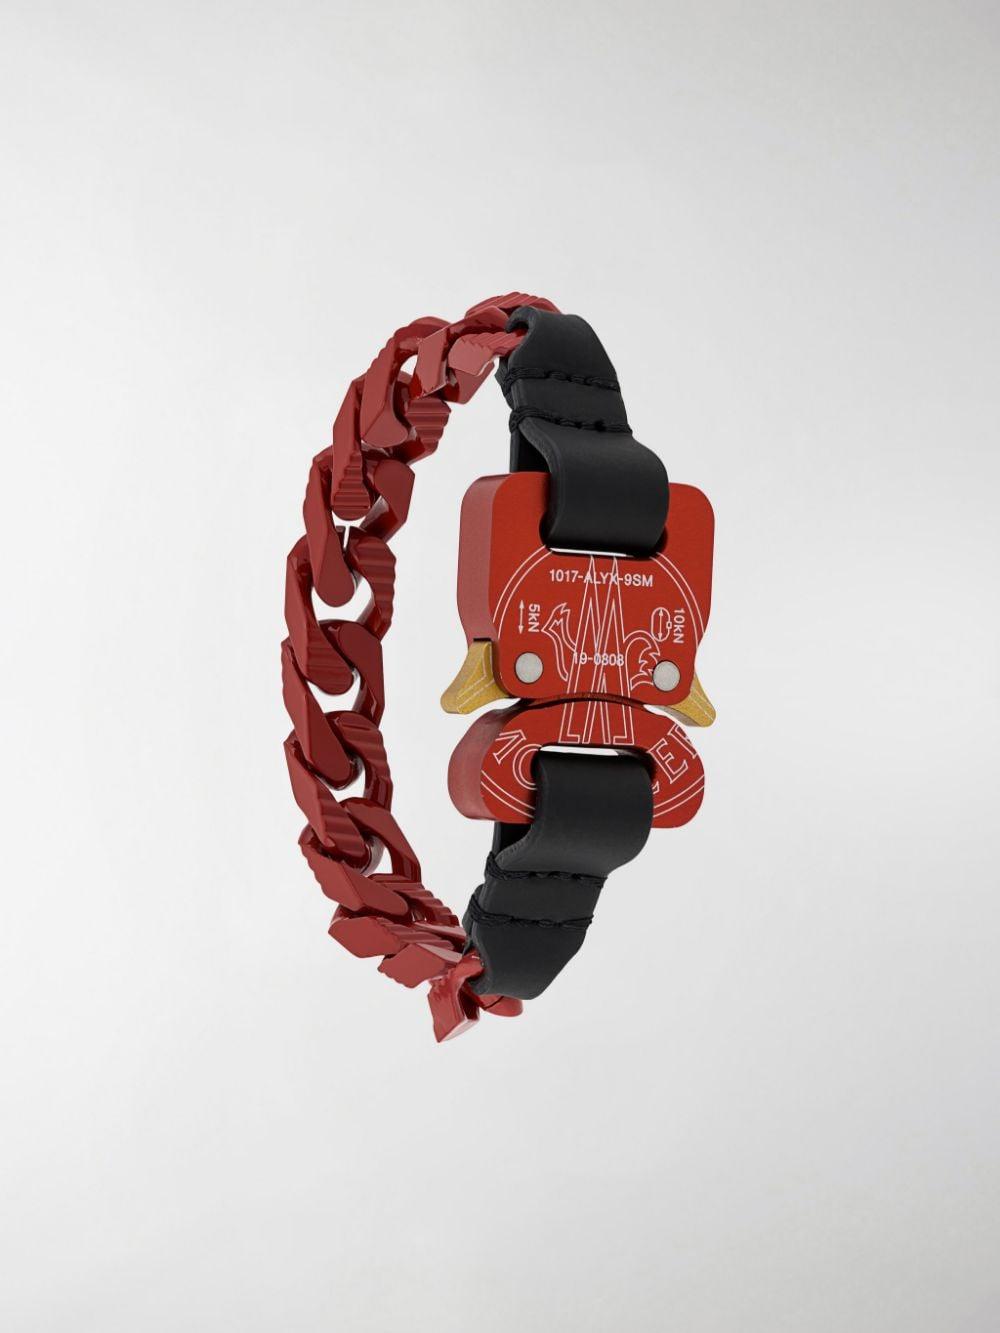 Moncler Genius Bracelet X 1017 Alyx 9sm in Red for Men - Lyst